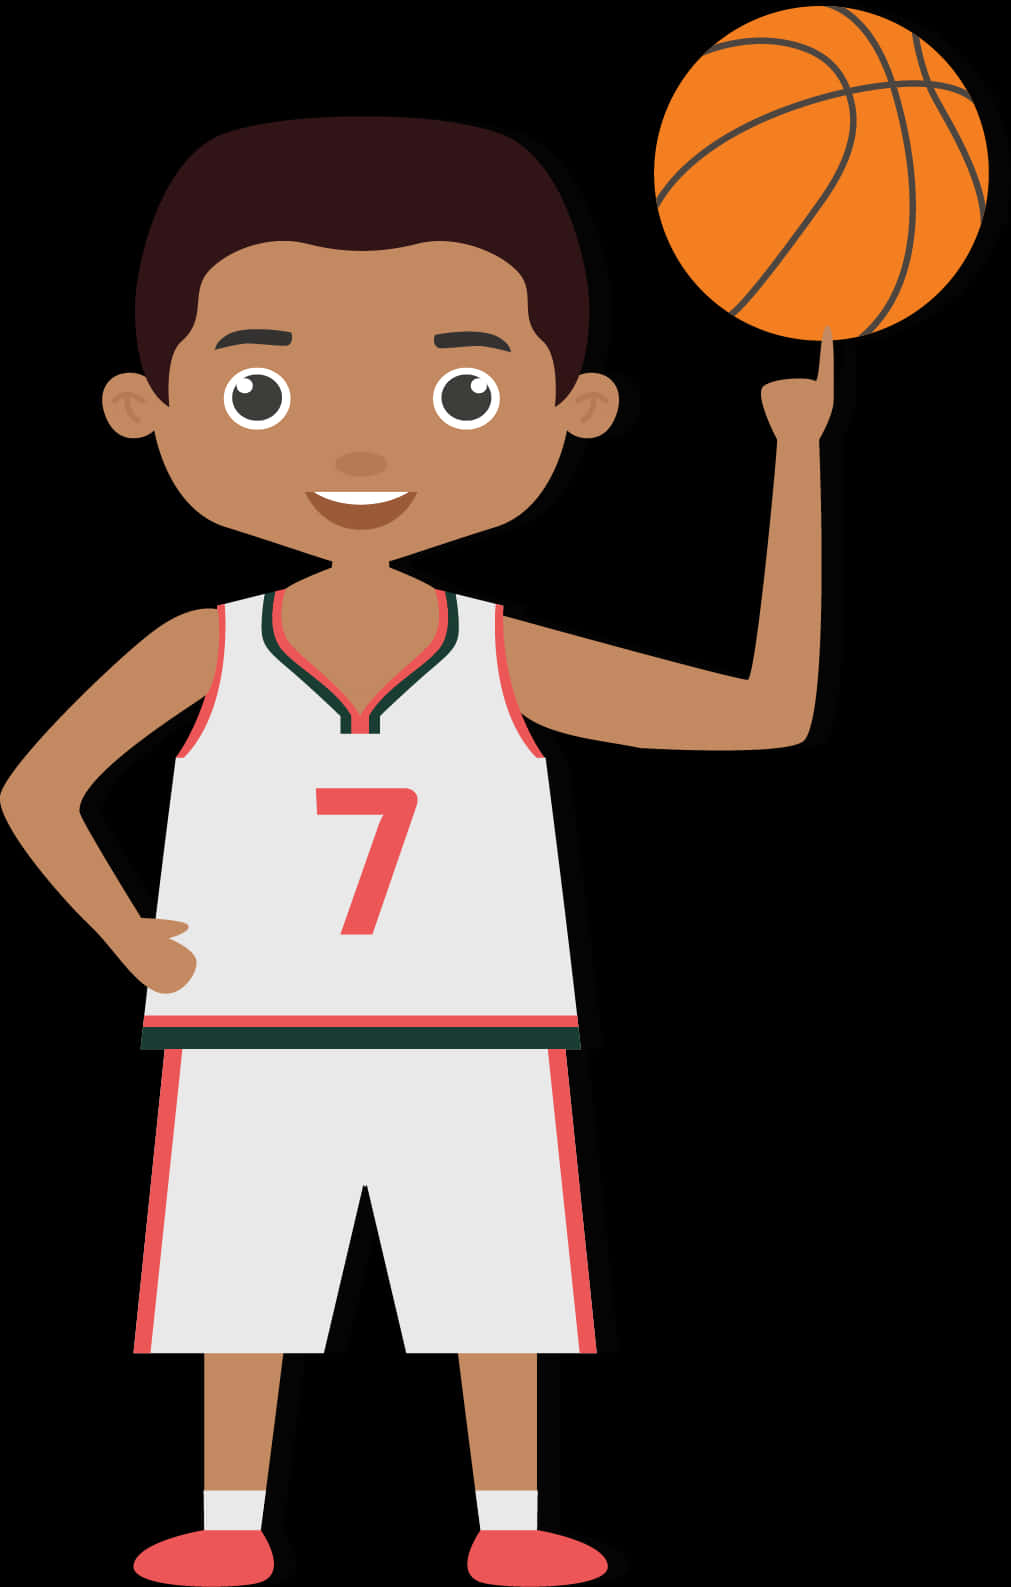 Young Basketball Player Cartoon PNG